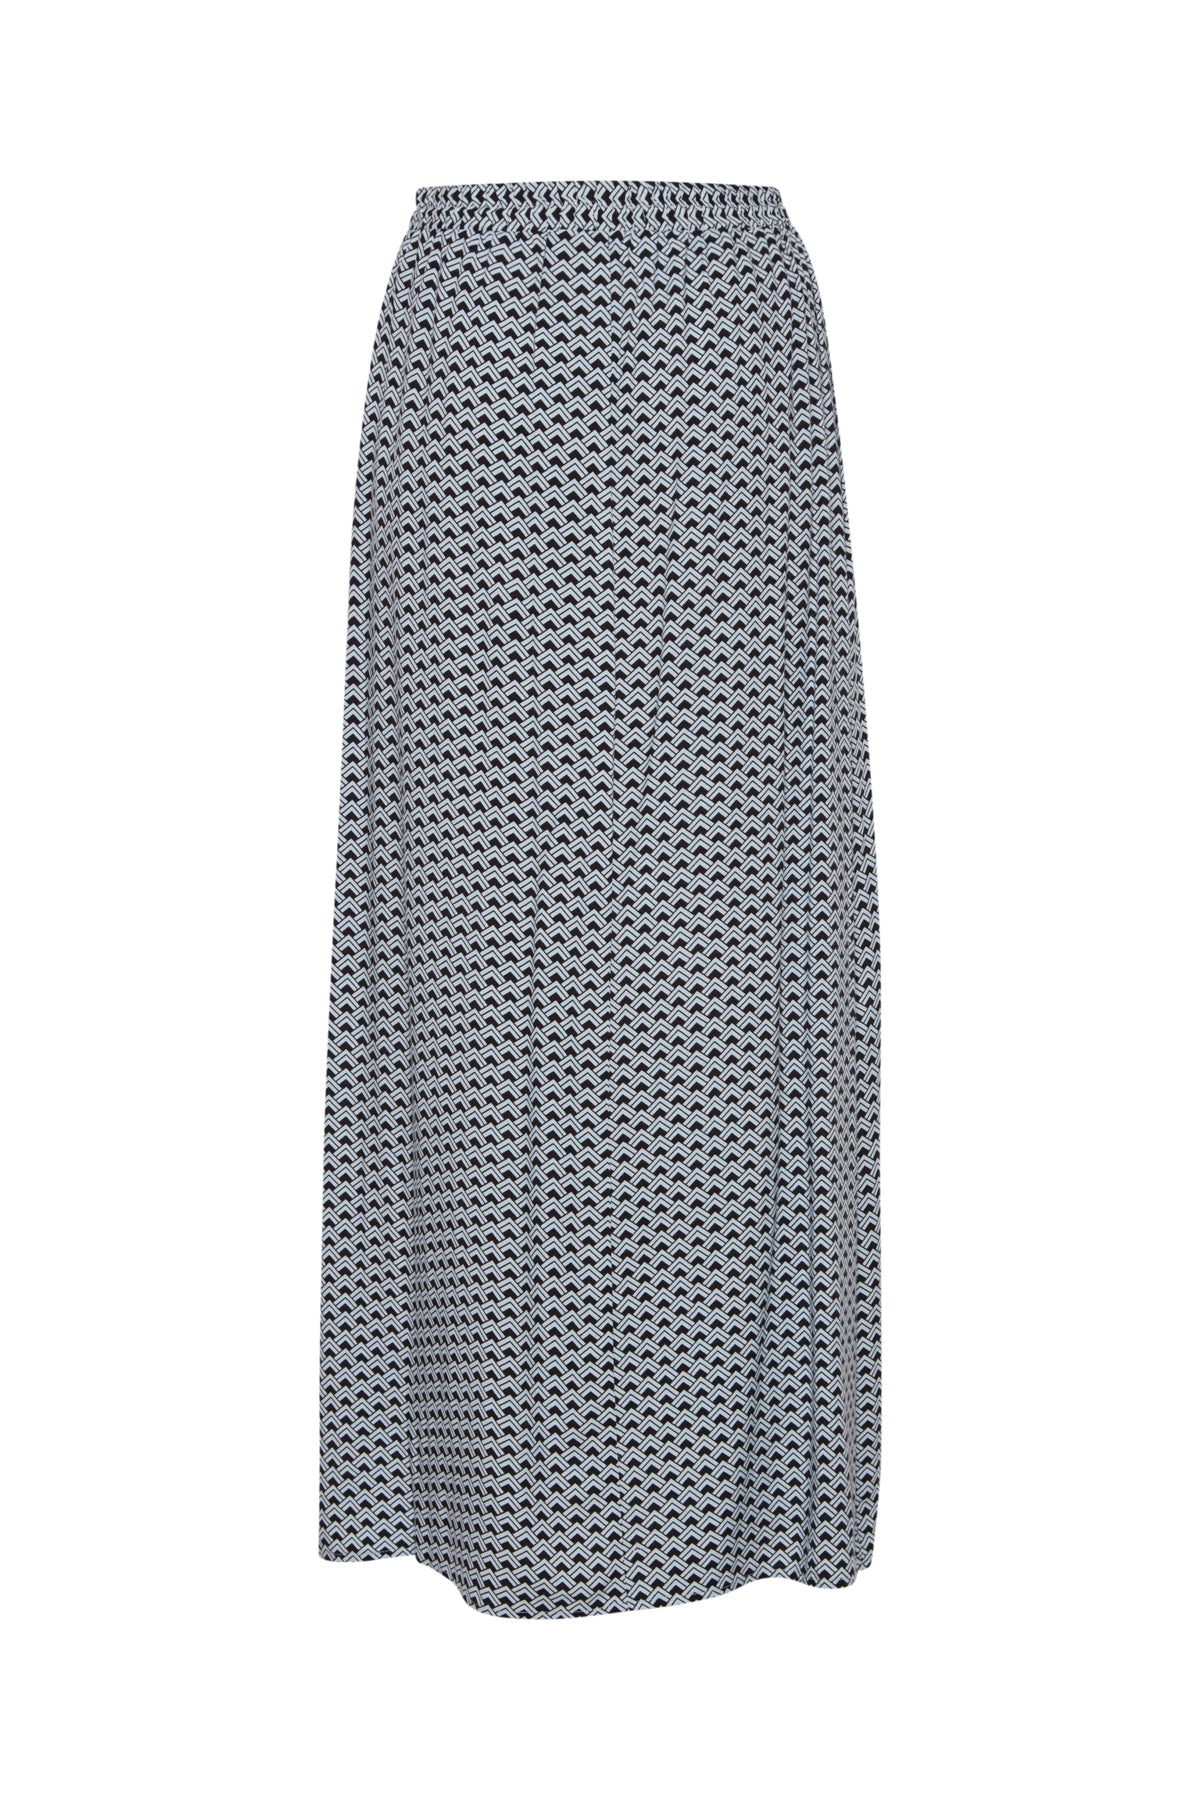 Tara Maxi Skirt (Navy)